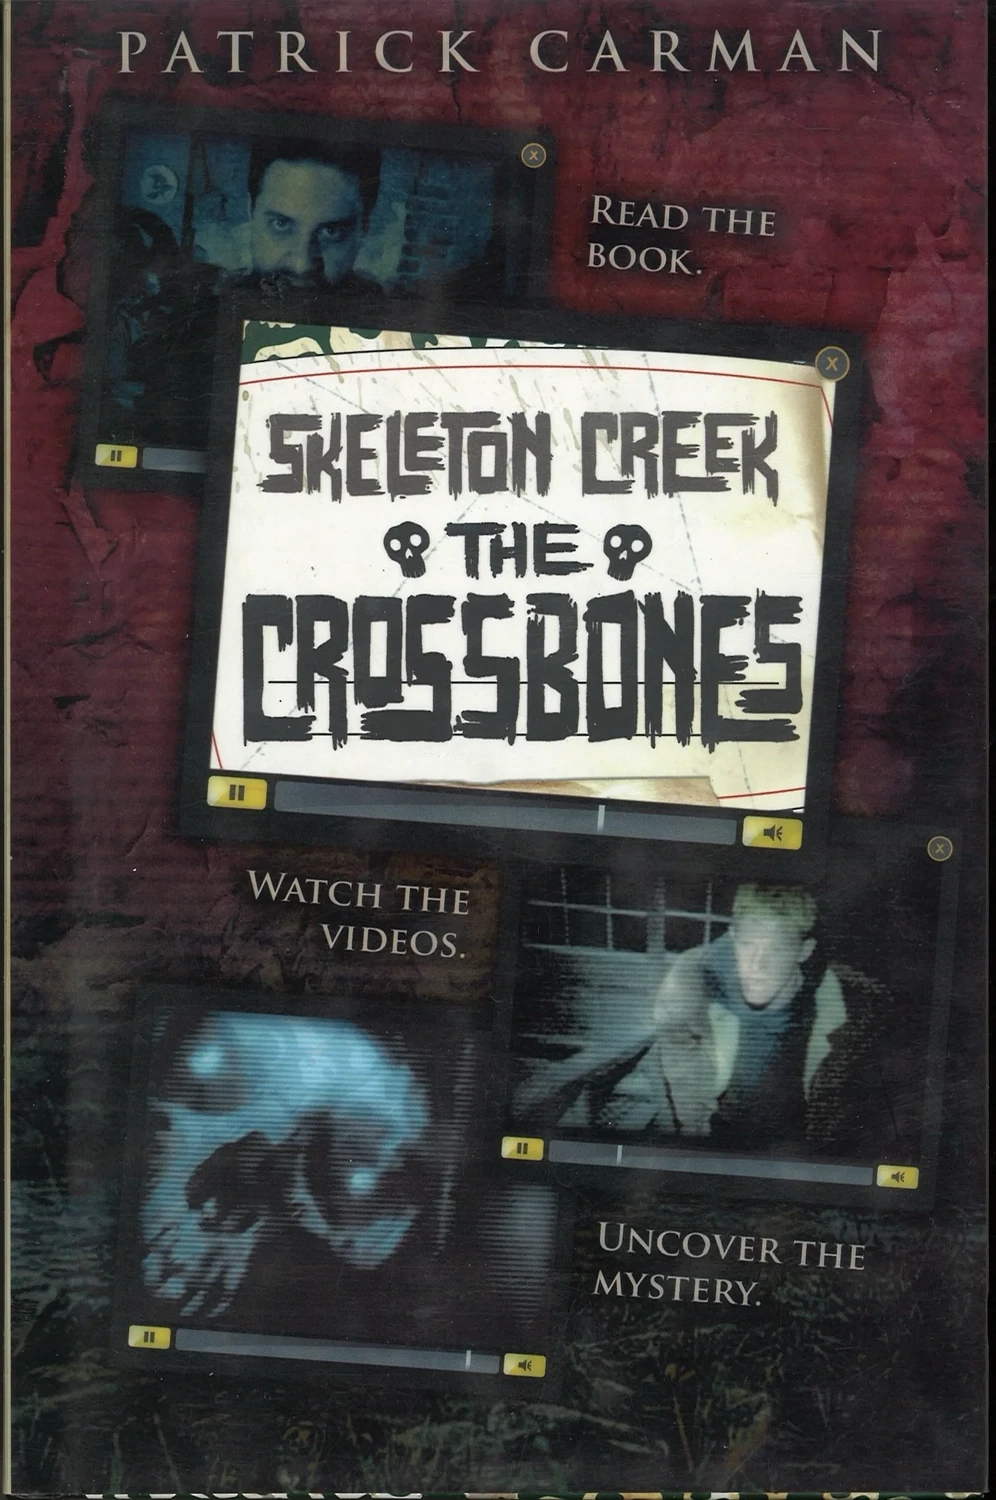 The Crossbones (Skeleton Creek, Book 3), Patrick Carman